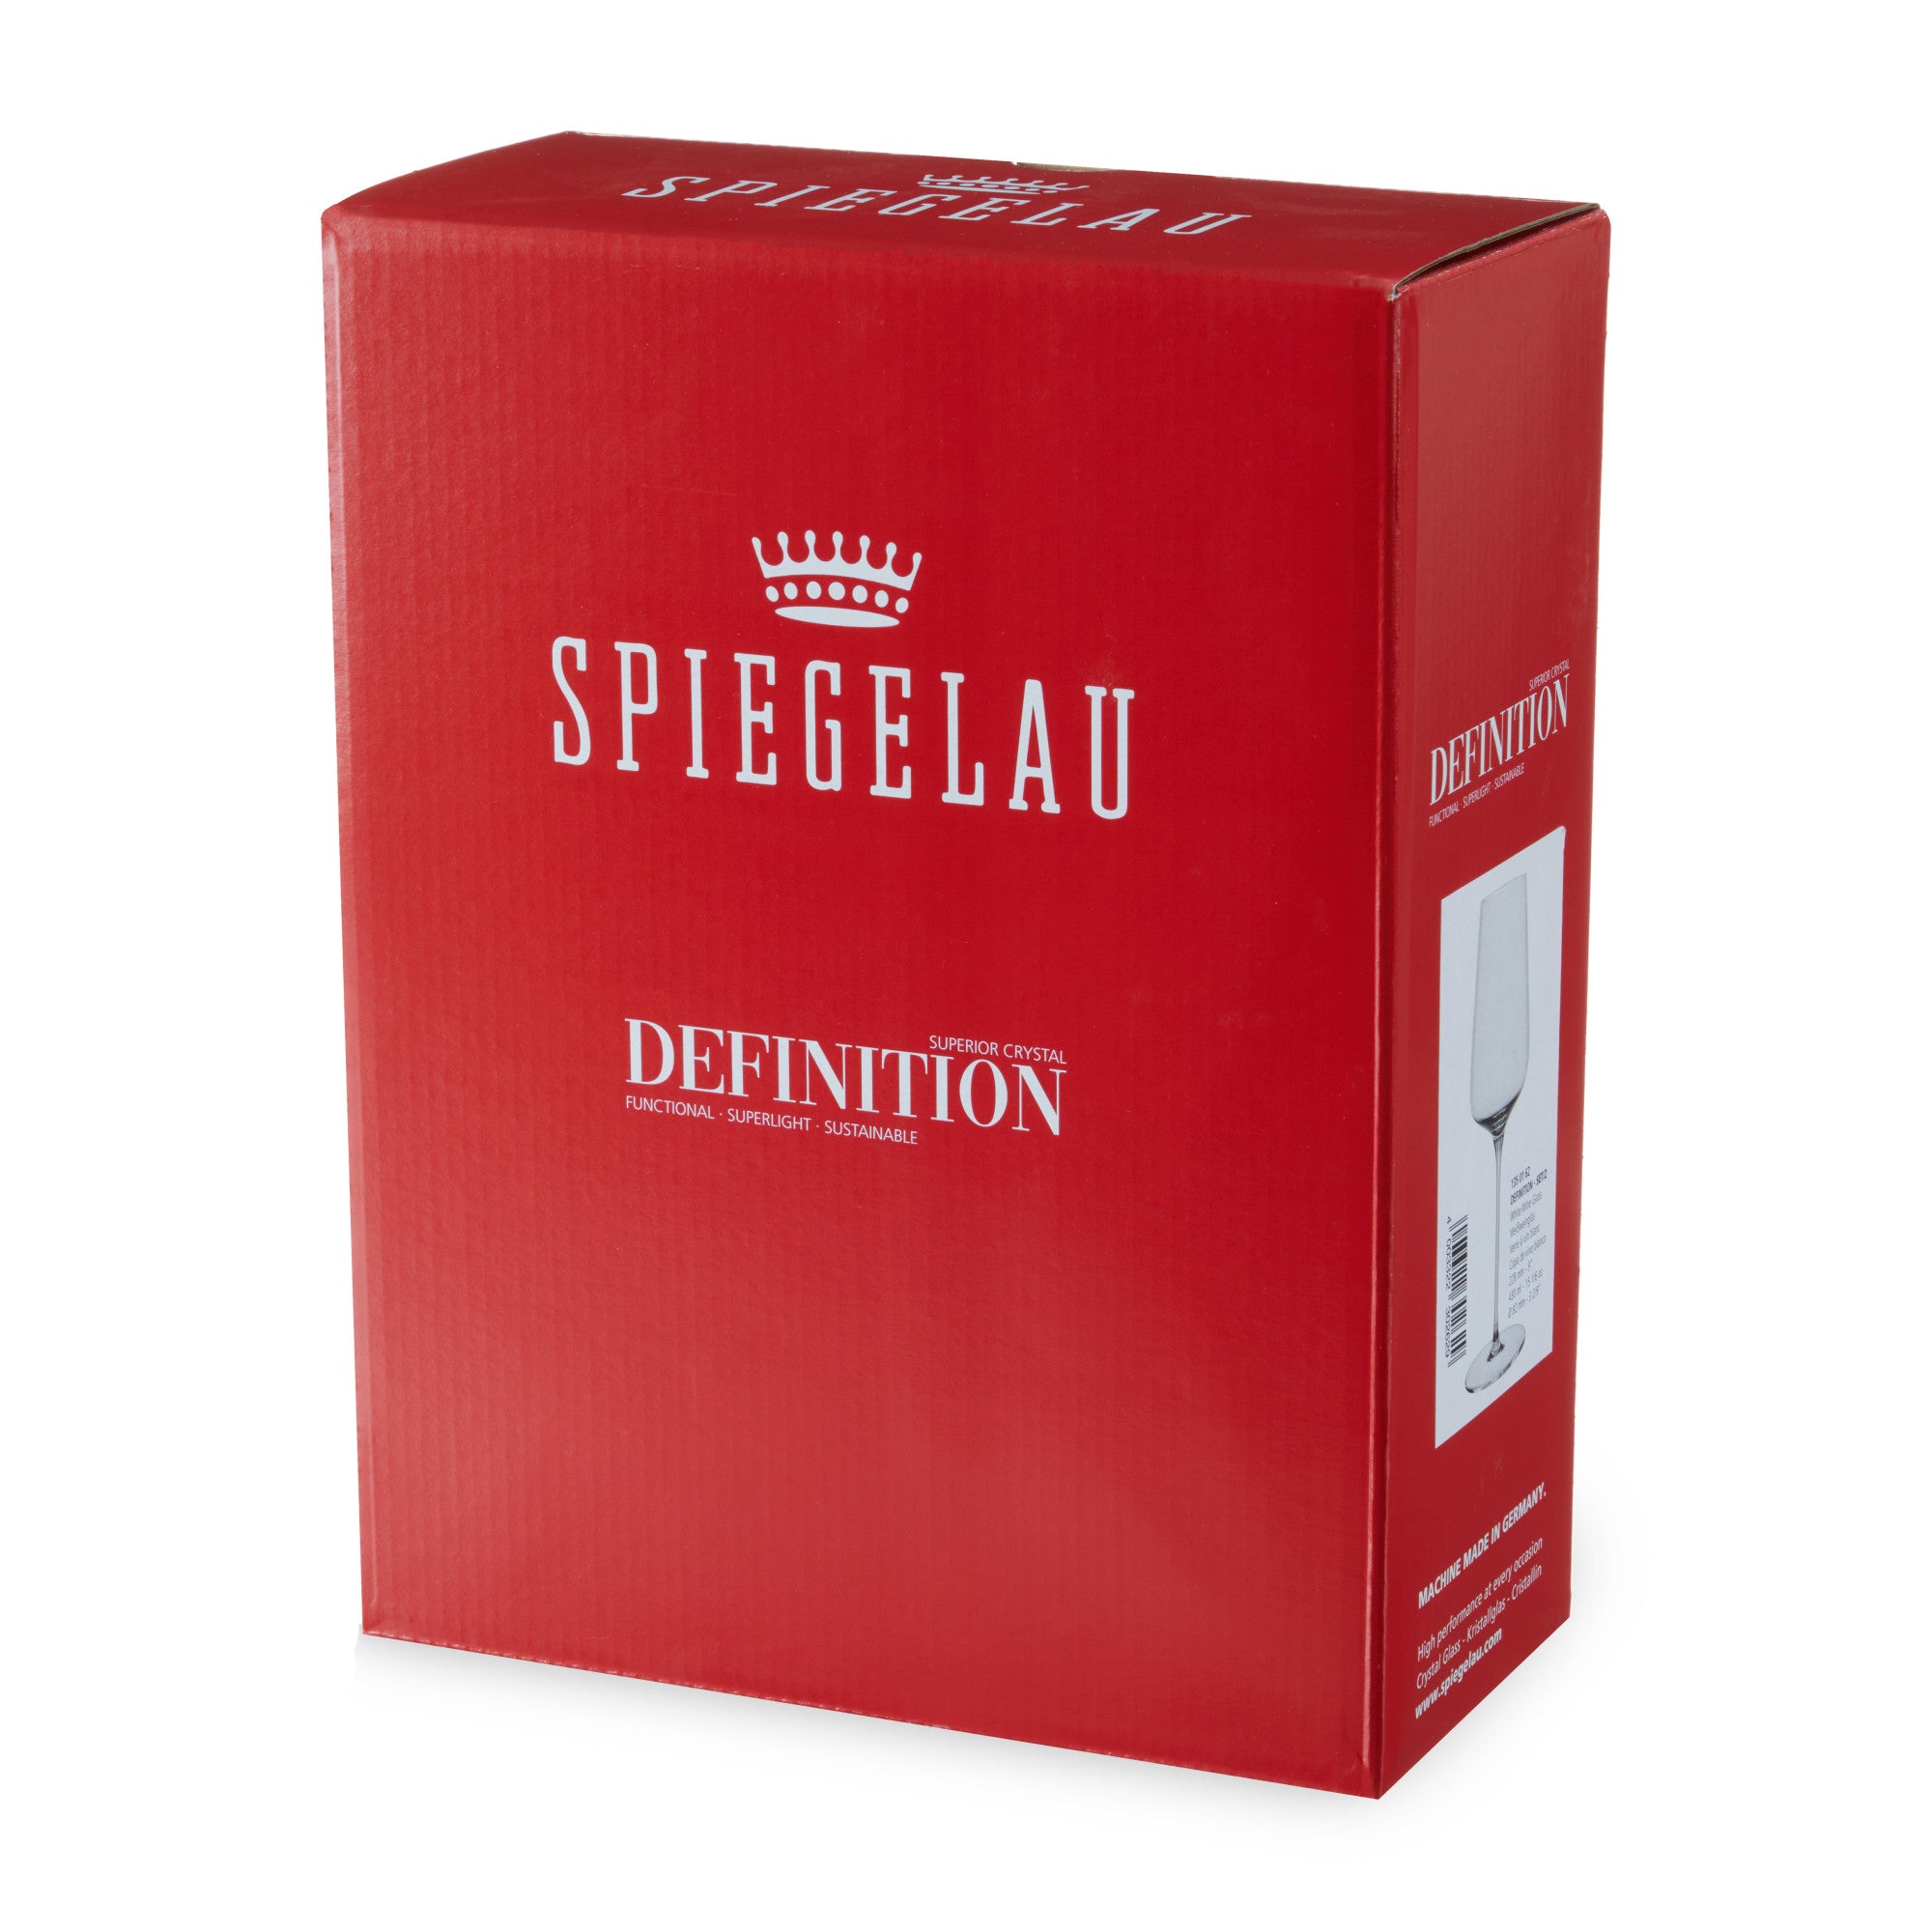 Spiegelau Definition 15.2 oz White Wine Glass set of 2 (1350162)